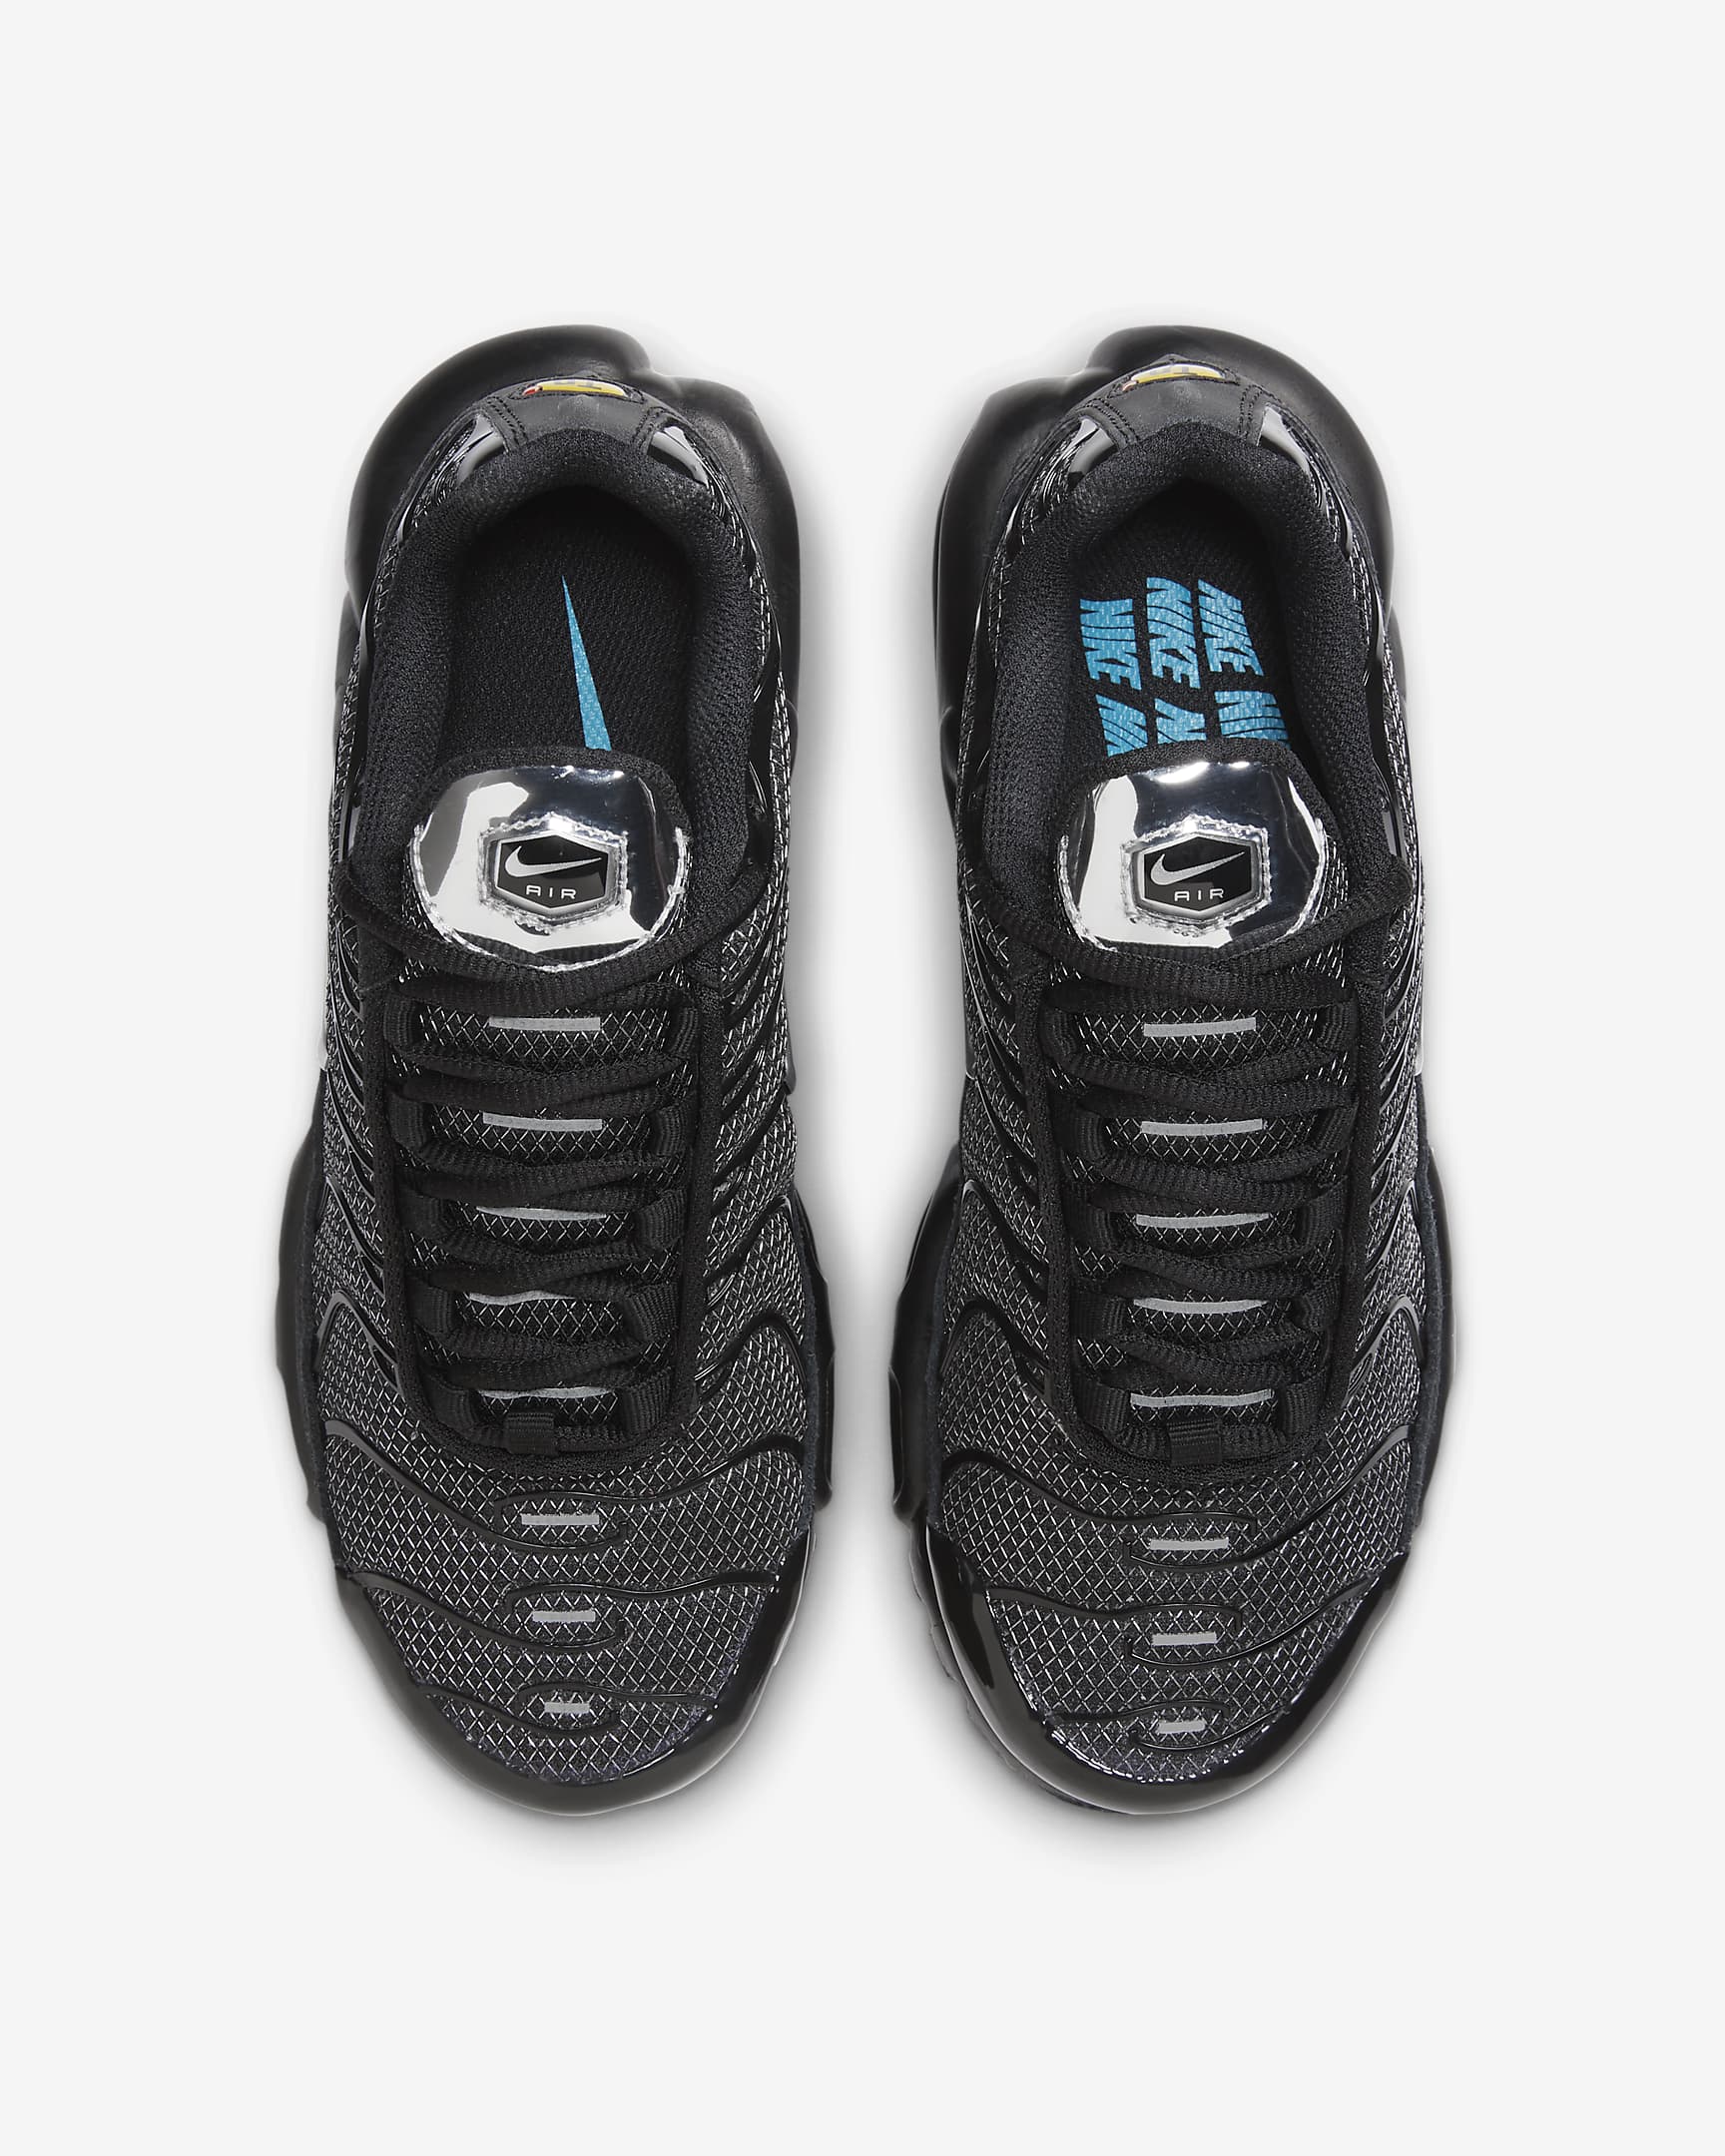 Nike Air Max Plus Women's Shoes - Black/Turquoise Blue/Metallic Silver